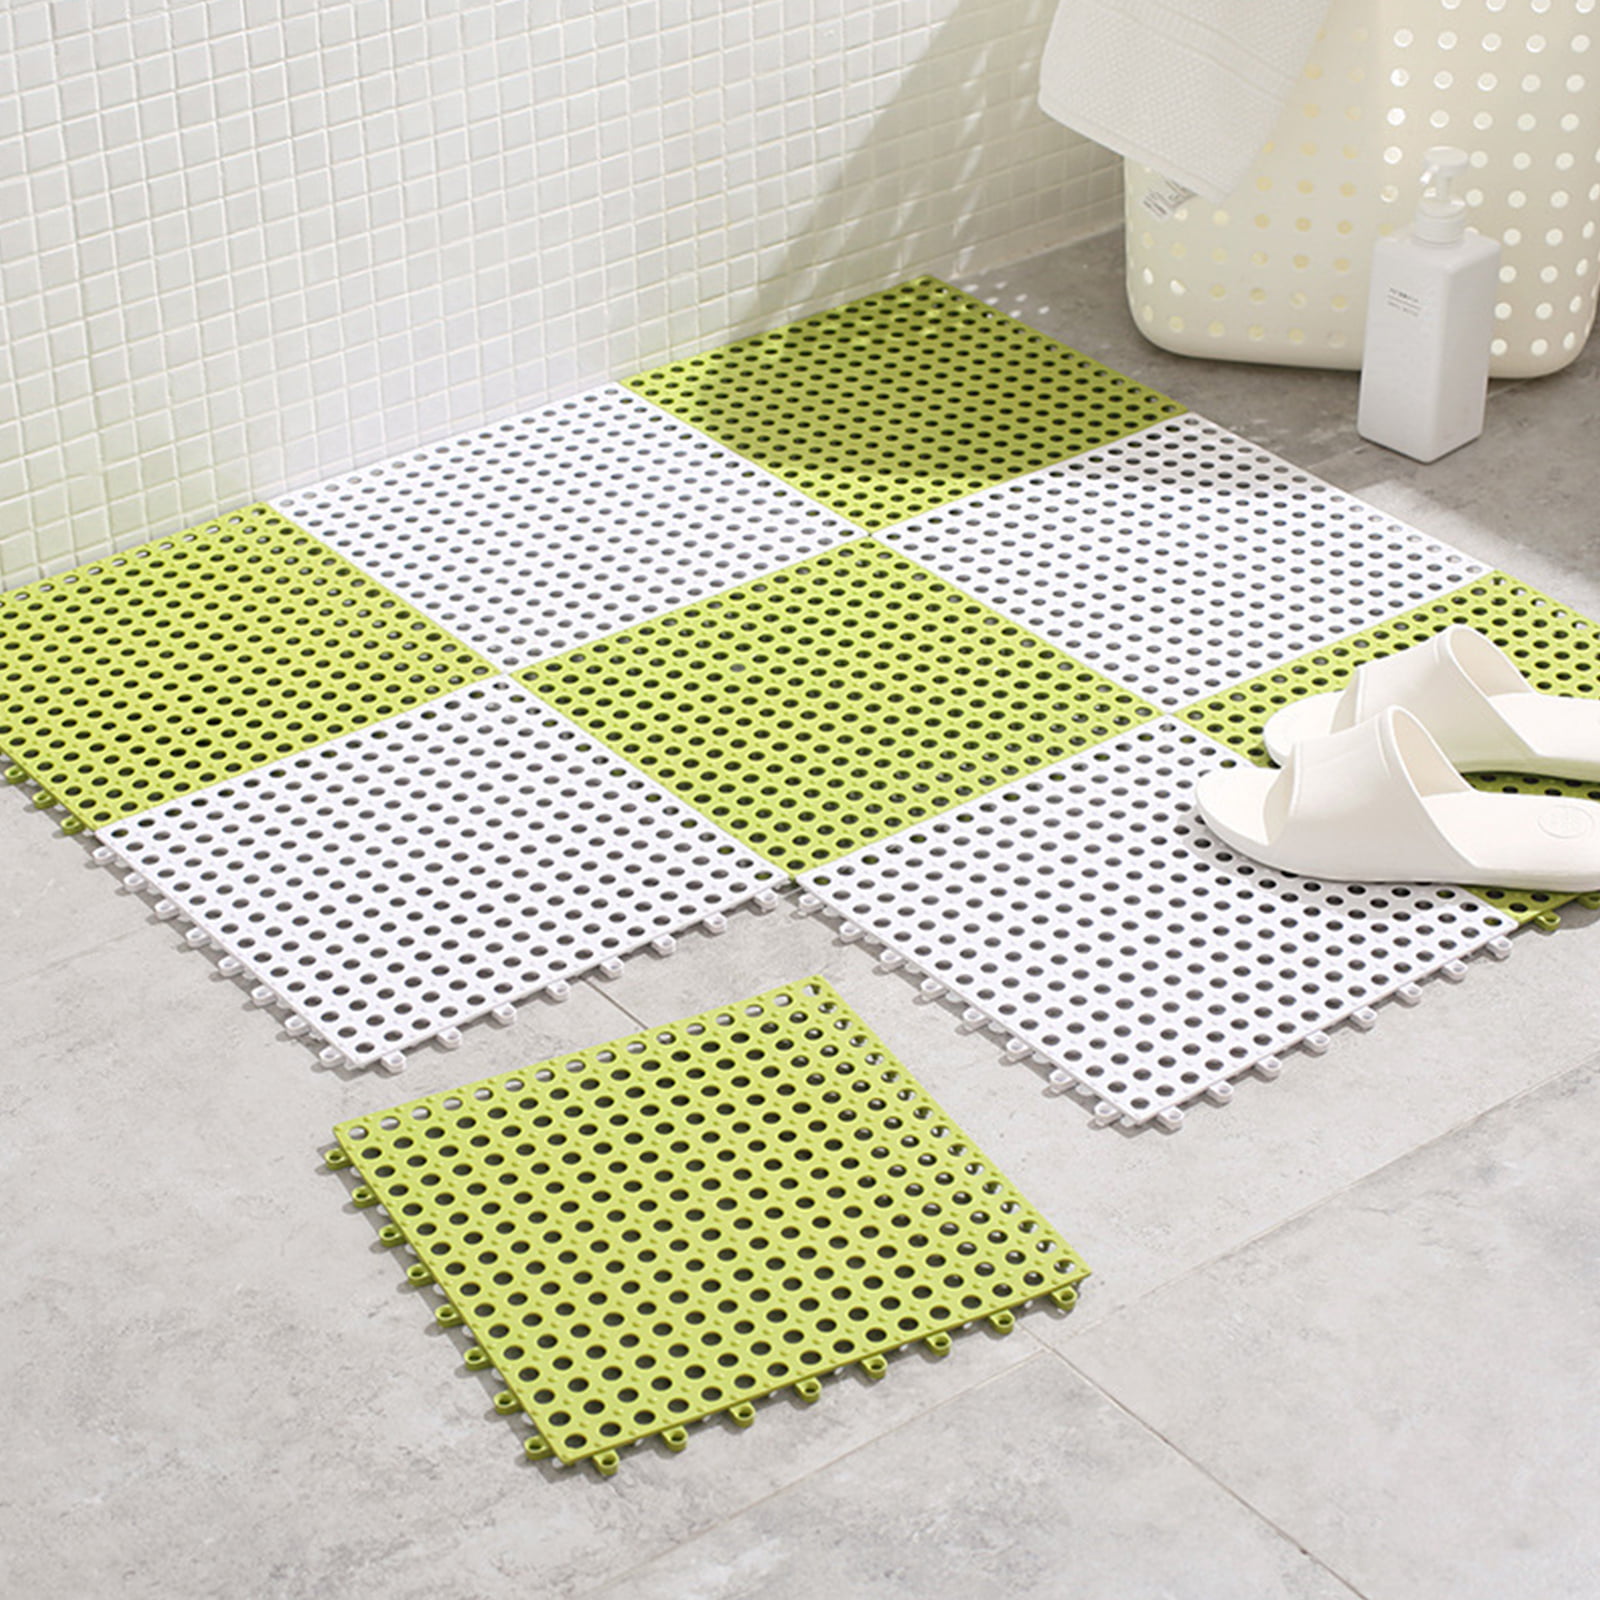  ACUEL Floor Mat for Shower, Non-Slip Shower Mat, Poly Lumber  Waterproof Bath Mat for Bathroom Inside Shower 20x 13 : Home & Kitchen